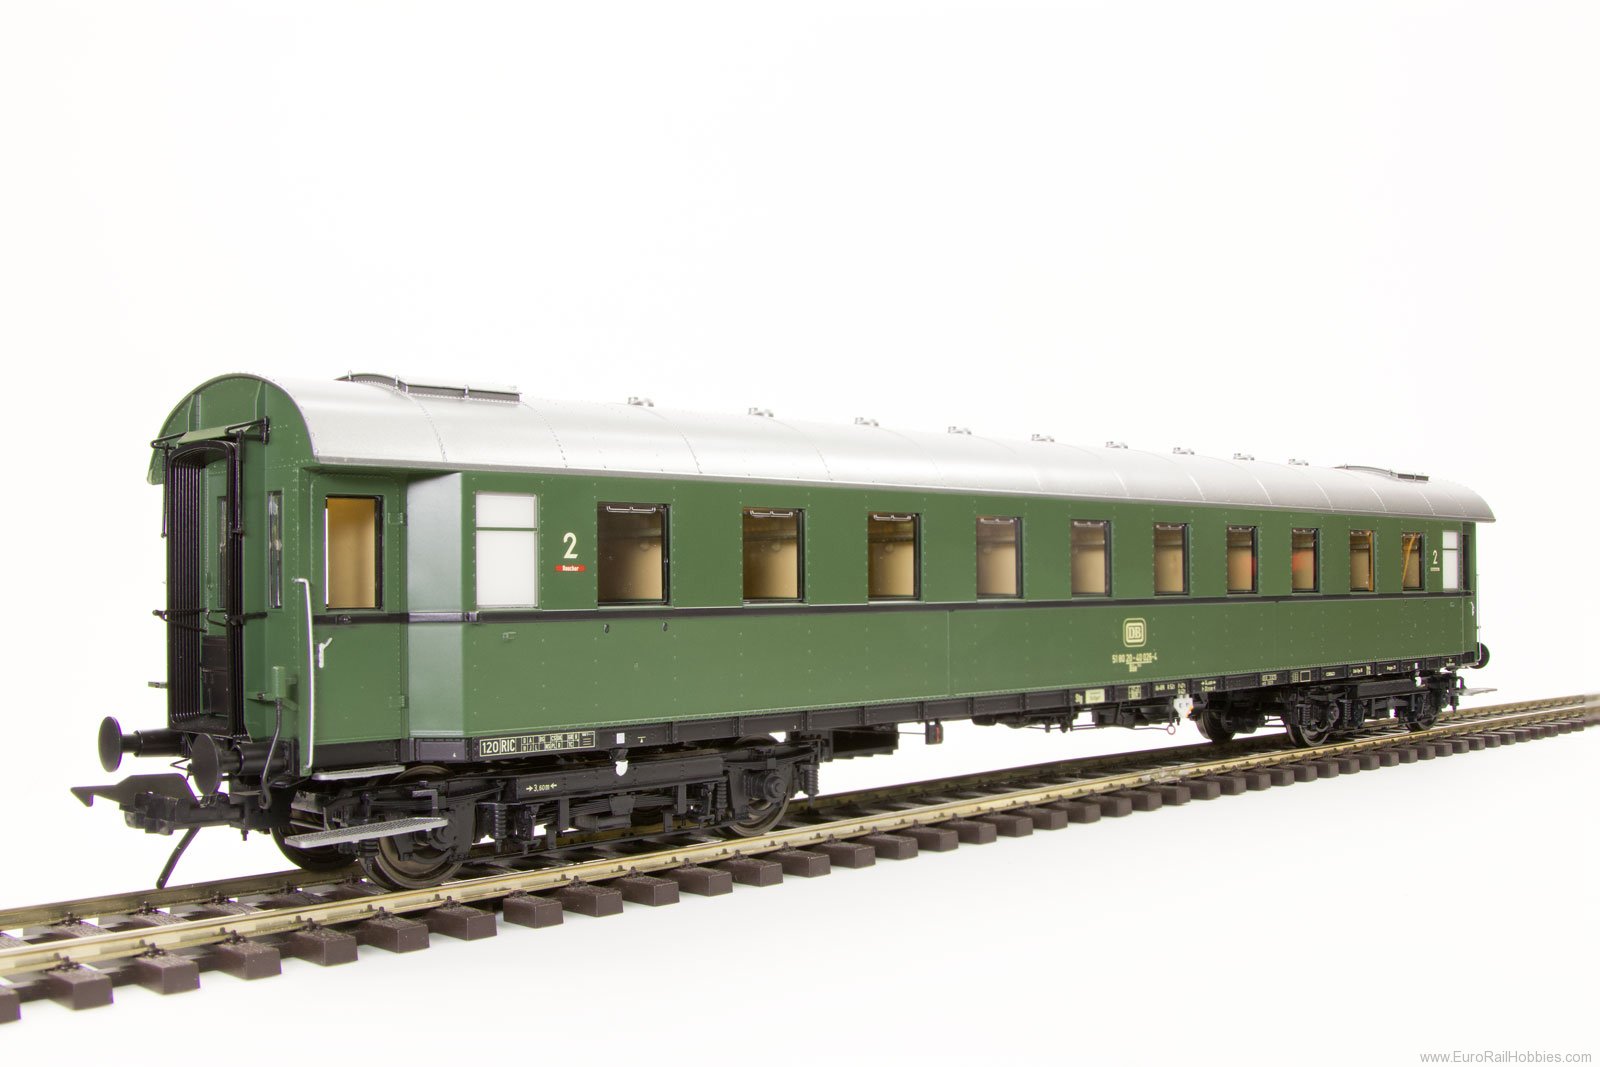 Lenz 41251.03 express train wagon size 29, 2nd class B4ue-2